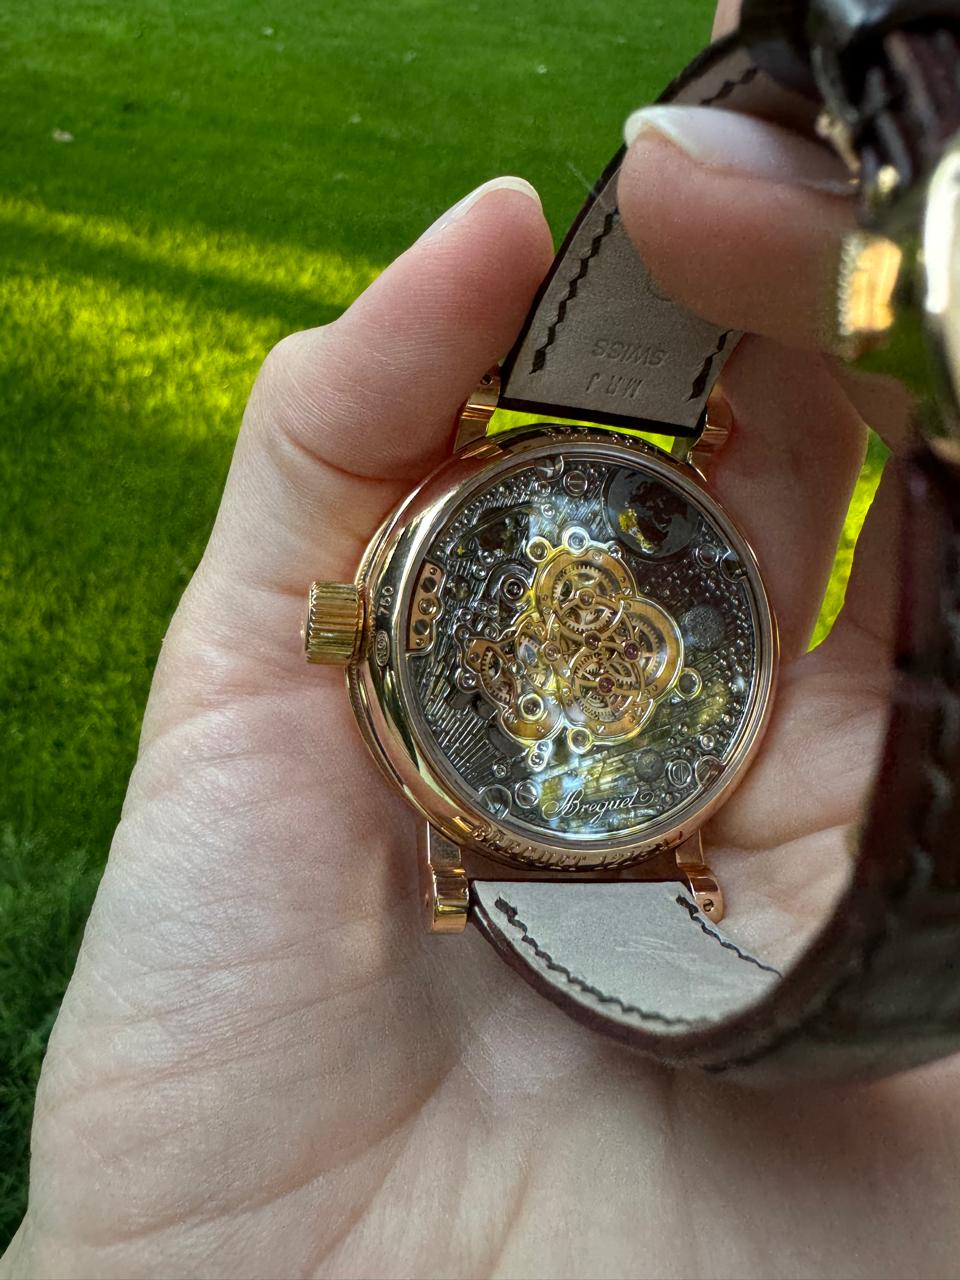 Breguet Classique Grande Complications Double Tourbillon 18k Rose Gold Men's Watch